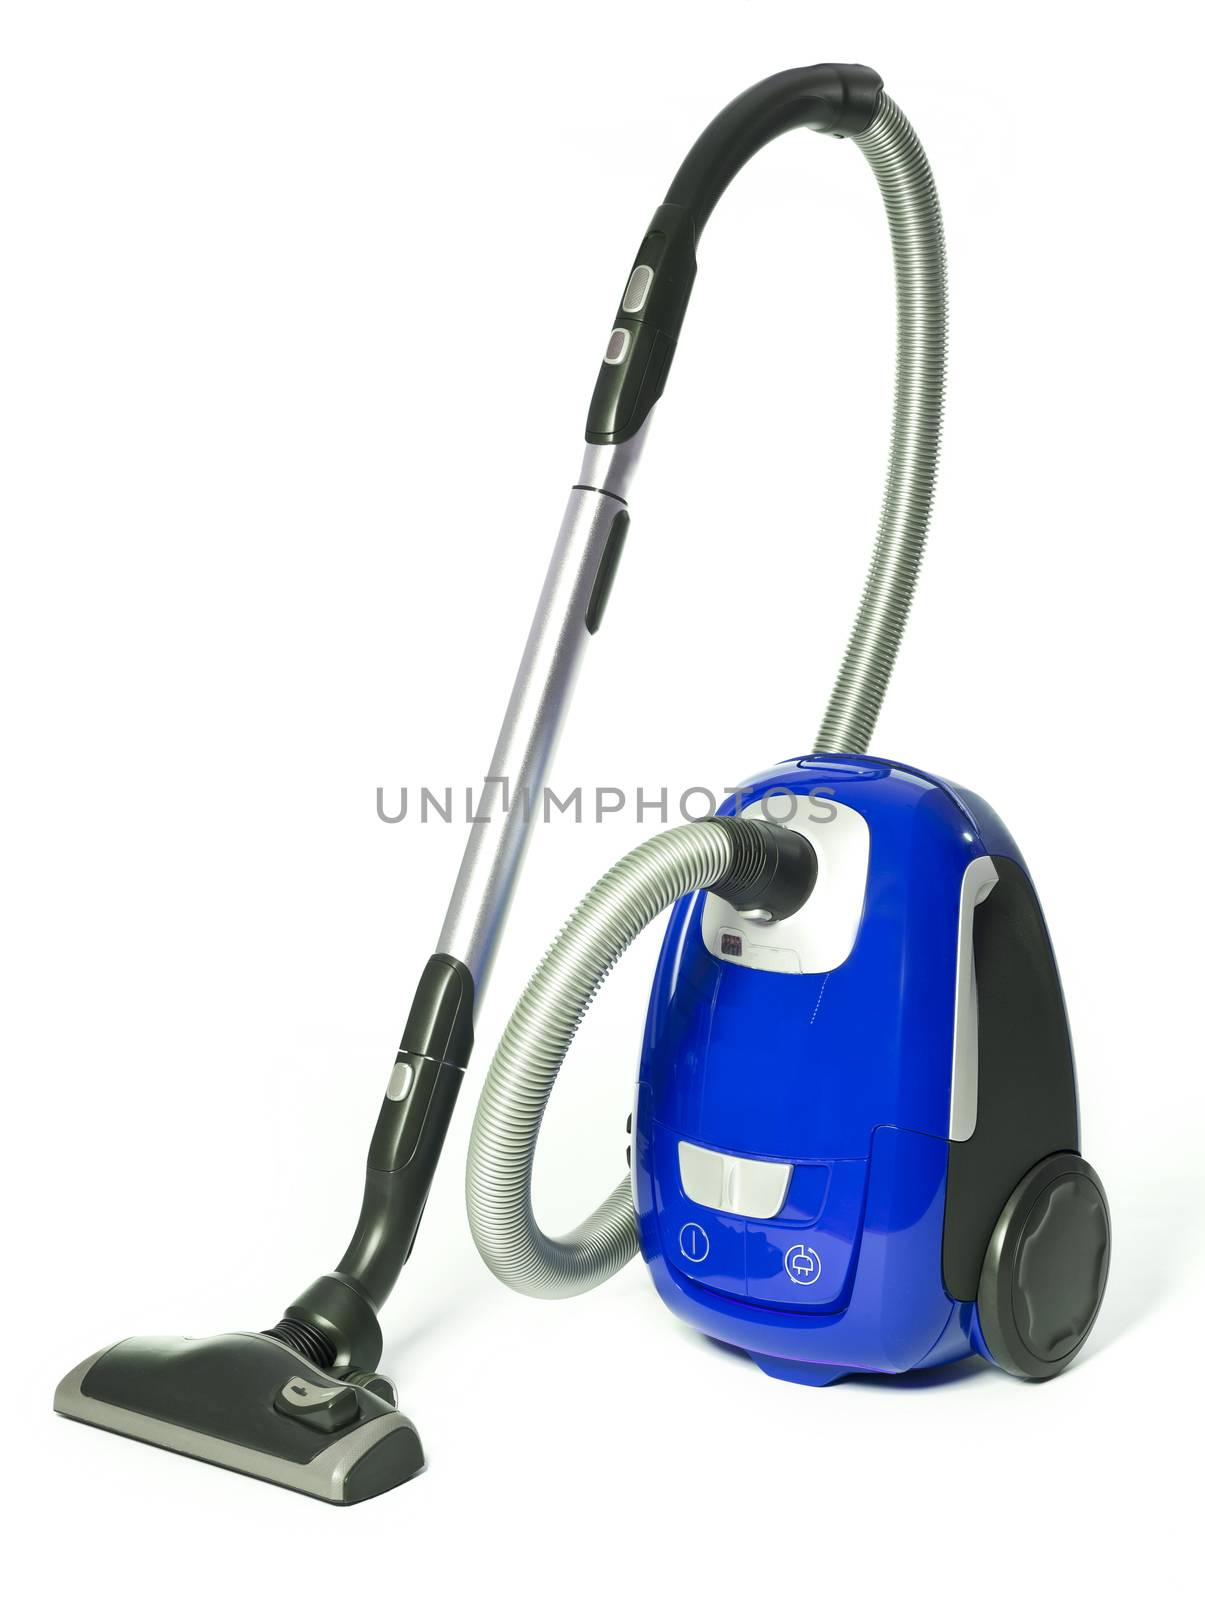 Vacuum Cleaner by gemenacom